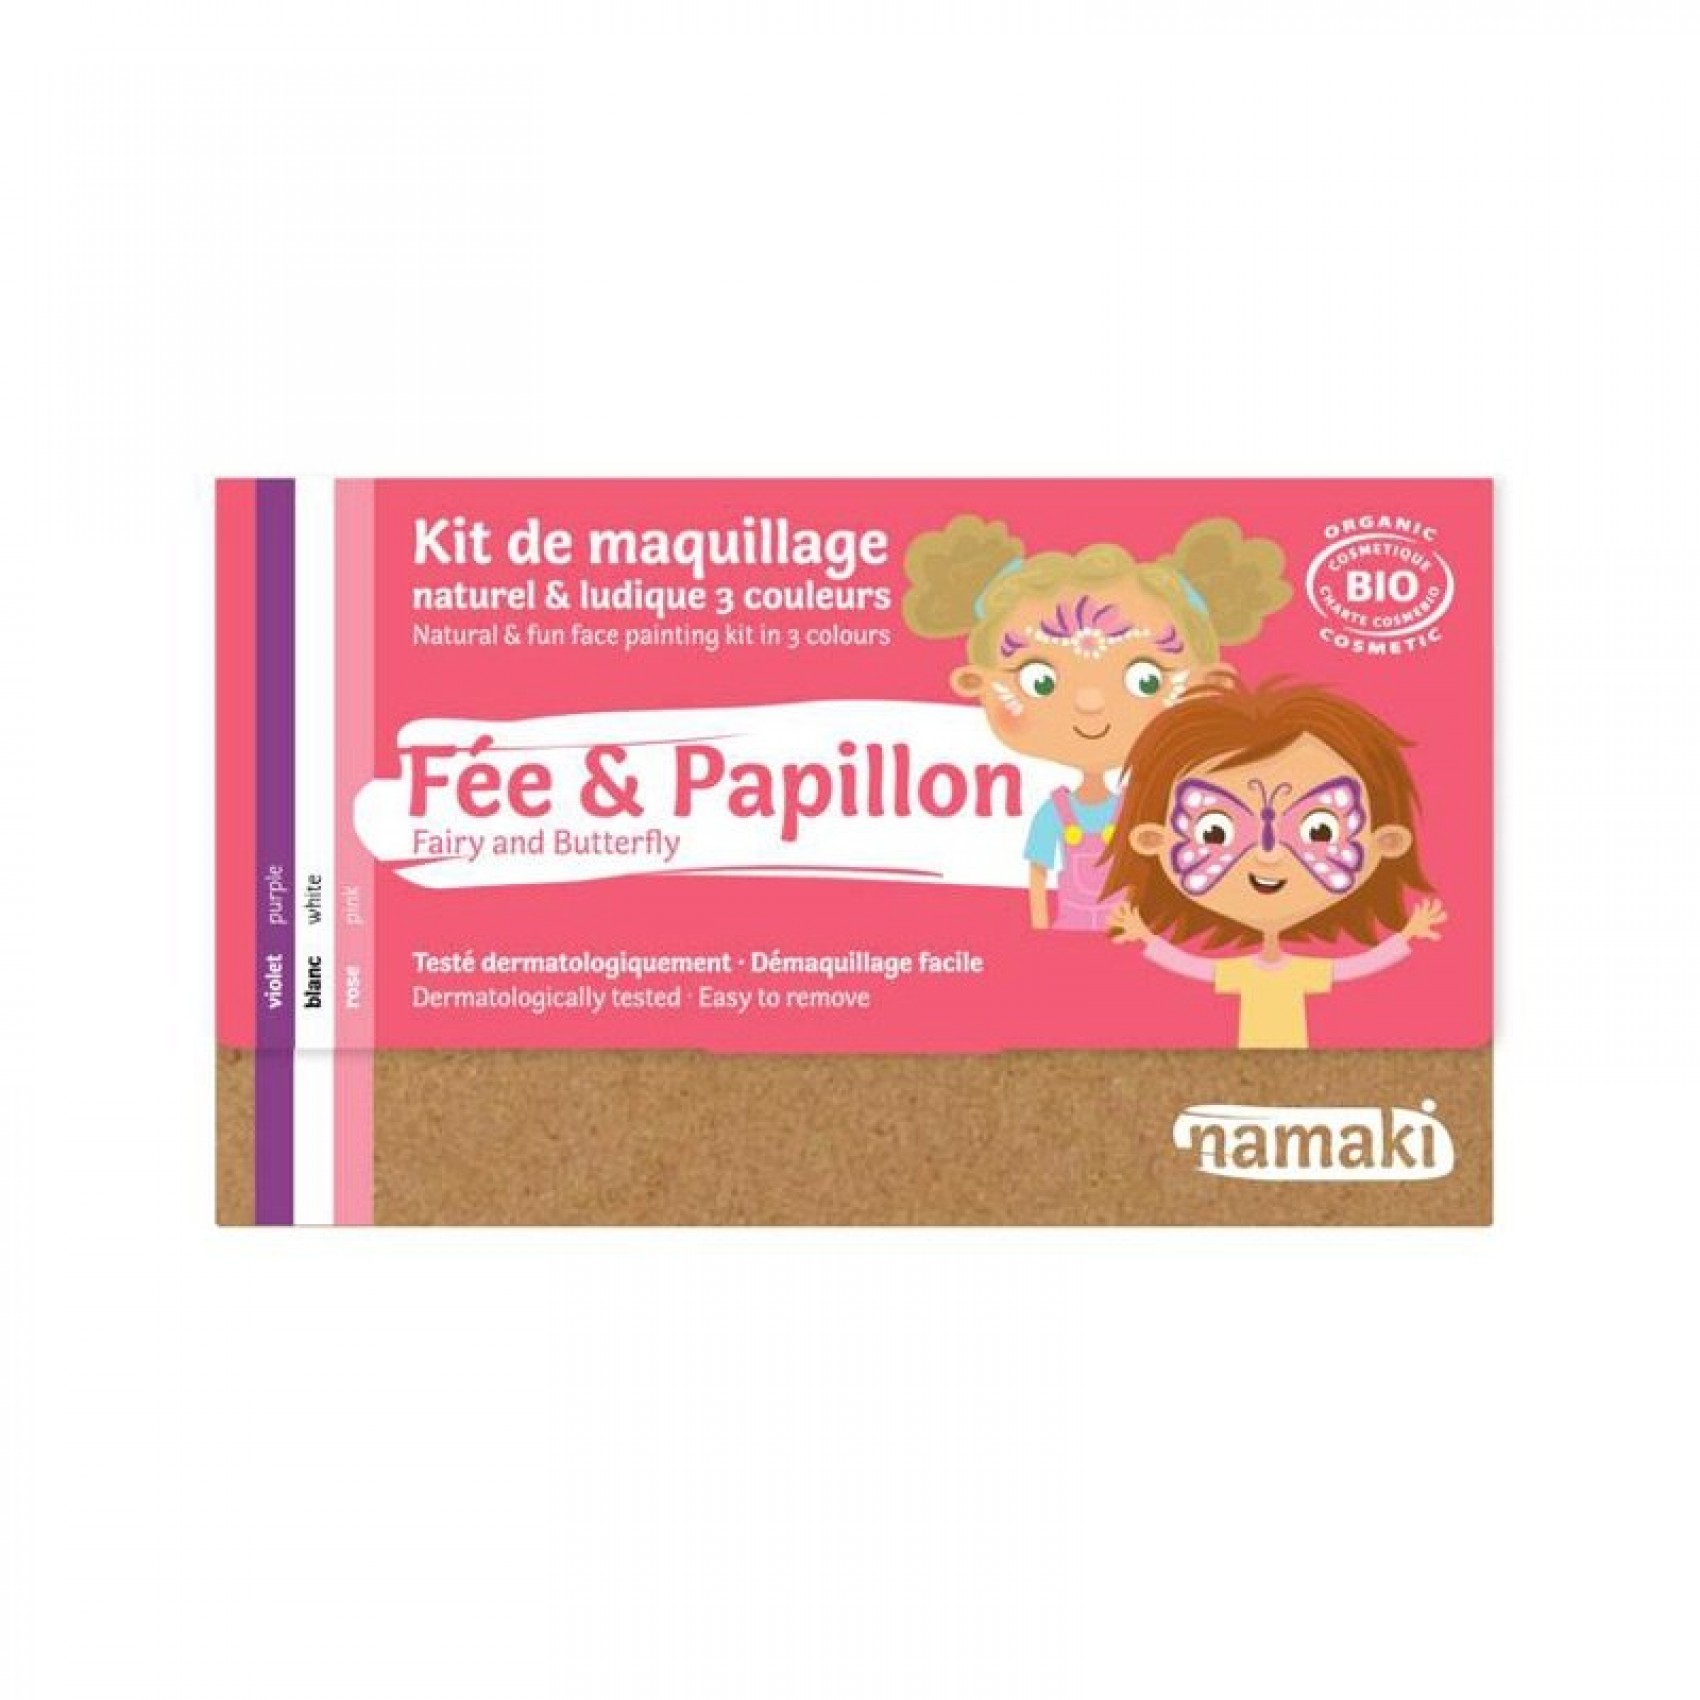 Kit de maquillage 3 couleurs Namaki - Princesse & licorne